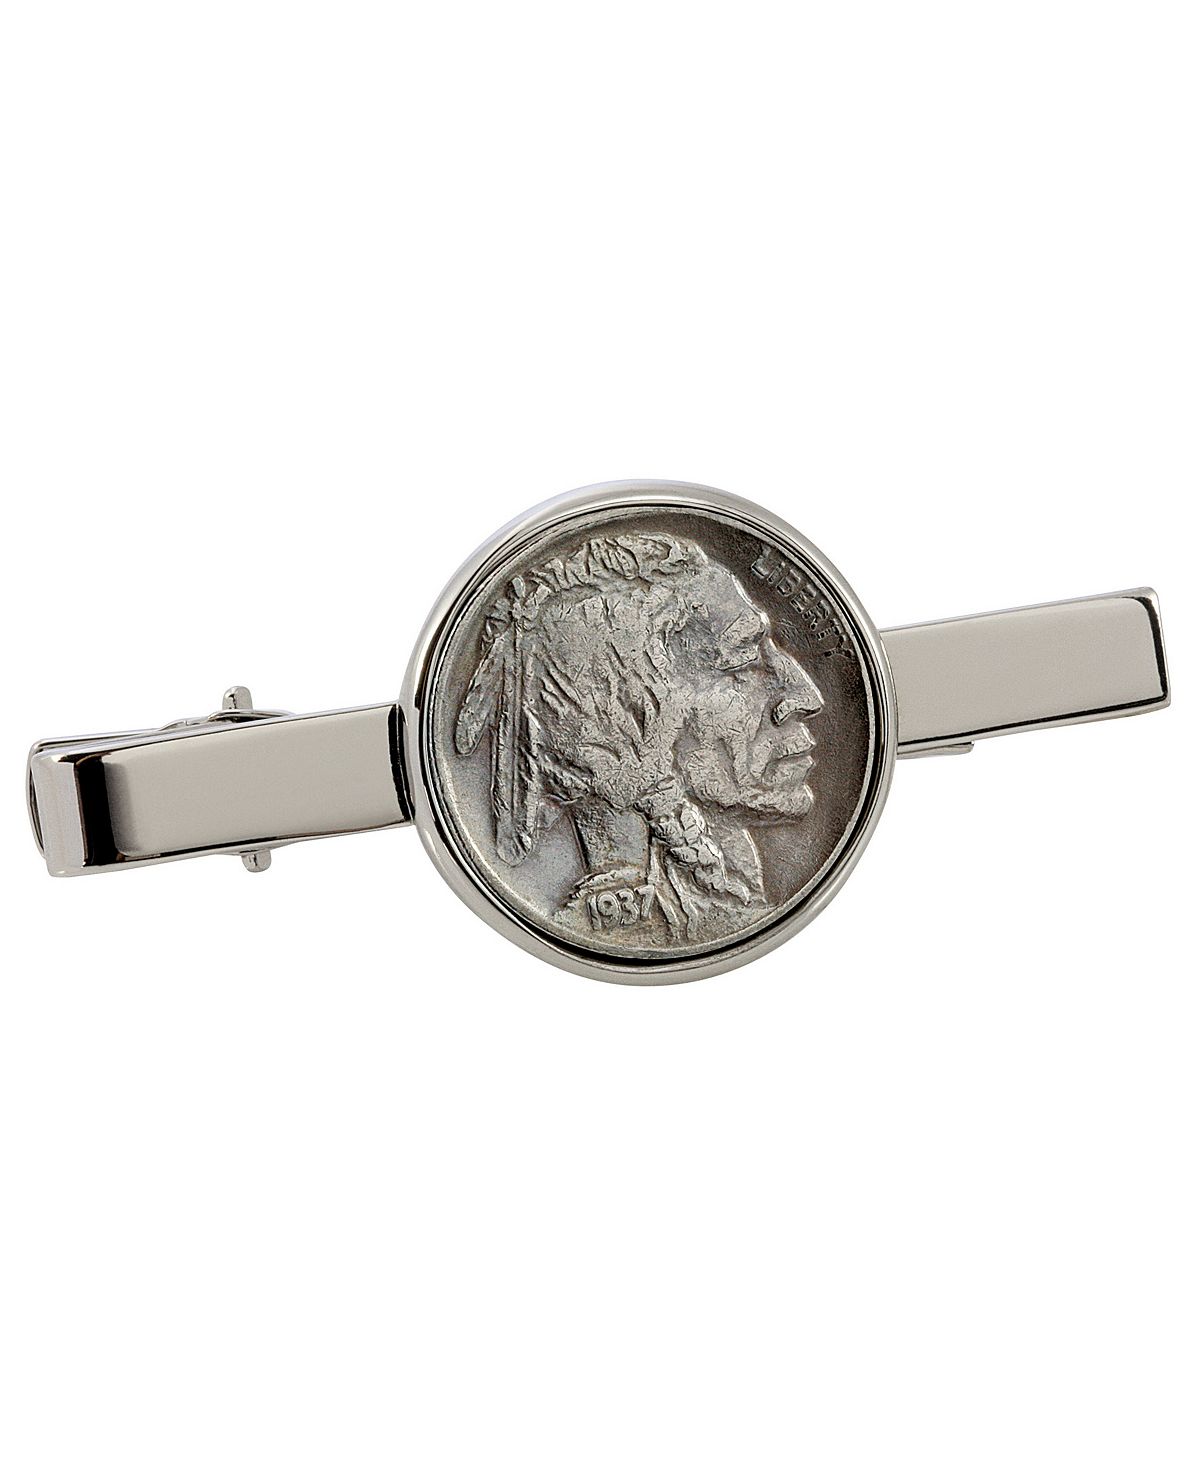 Зажим для галстука в виде никелевой монеты Buffalo American Coin Treasures american rangers sexy coin skull silver dollar commemorative collectible coin challenge coin gift